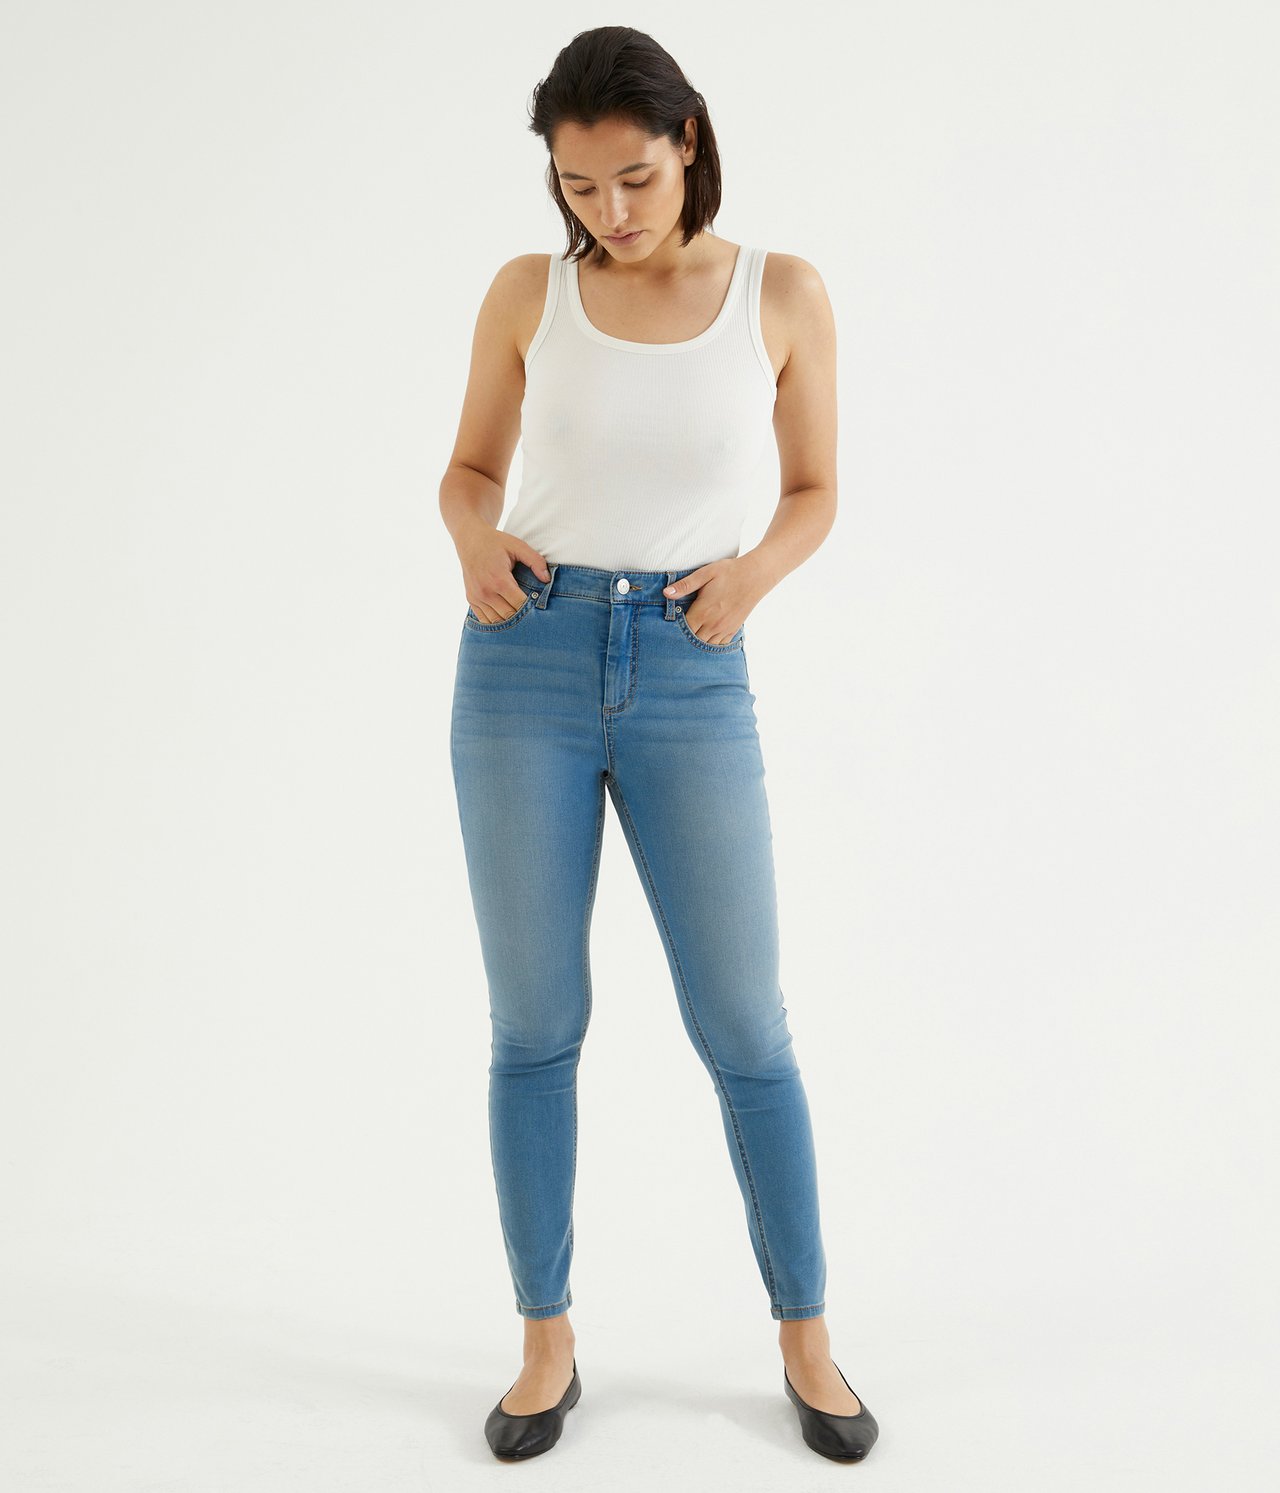 Super slim jeans short leg - Denim - 1